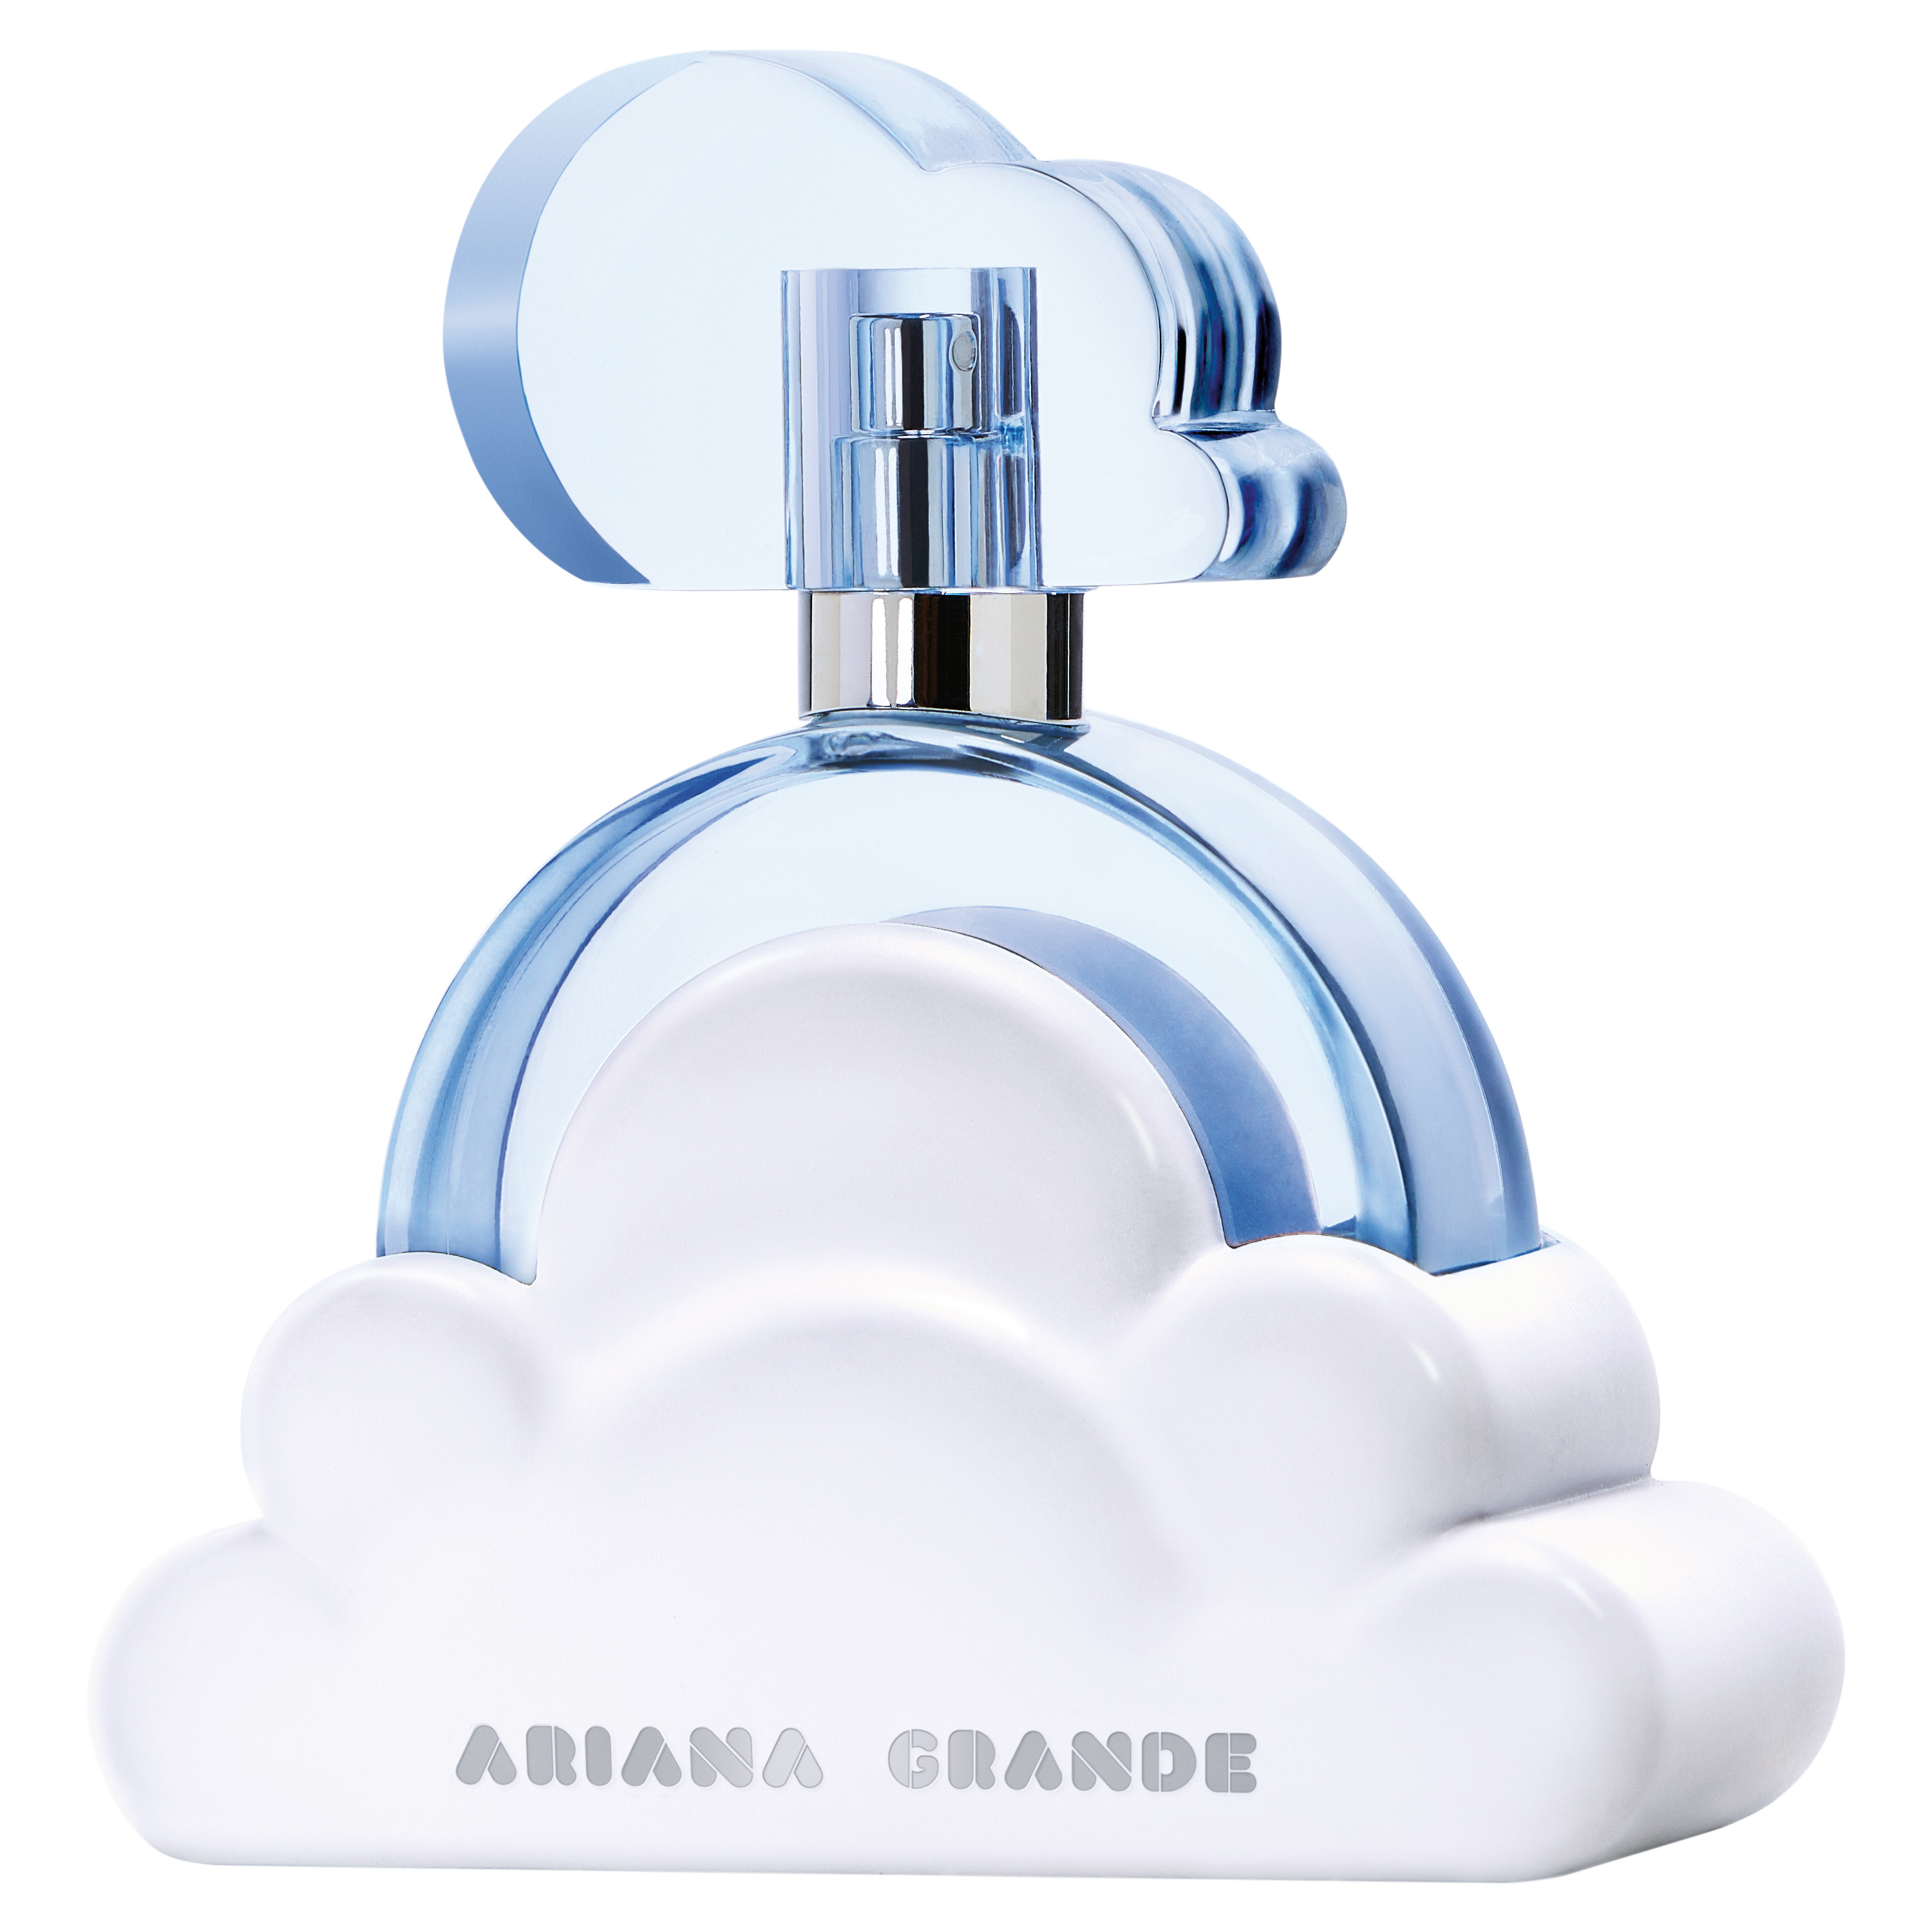 Ariana Grande Cloud Eau De Perfume, Perfume for Women, 1.0 oz - image 1 of 3